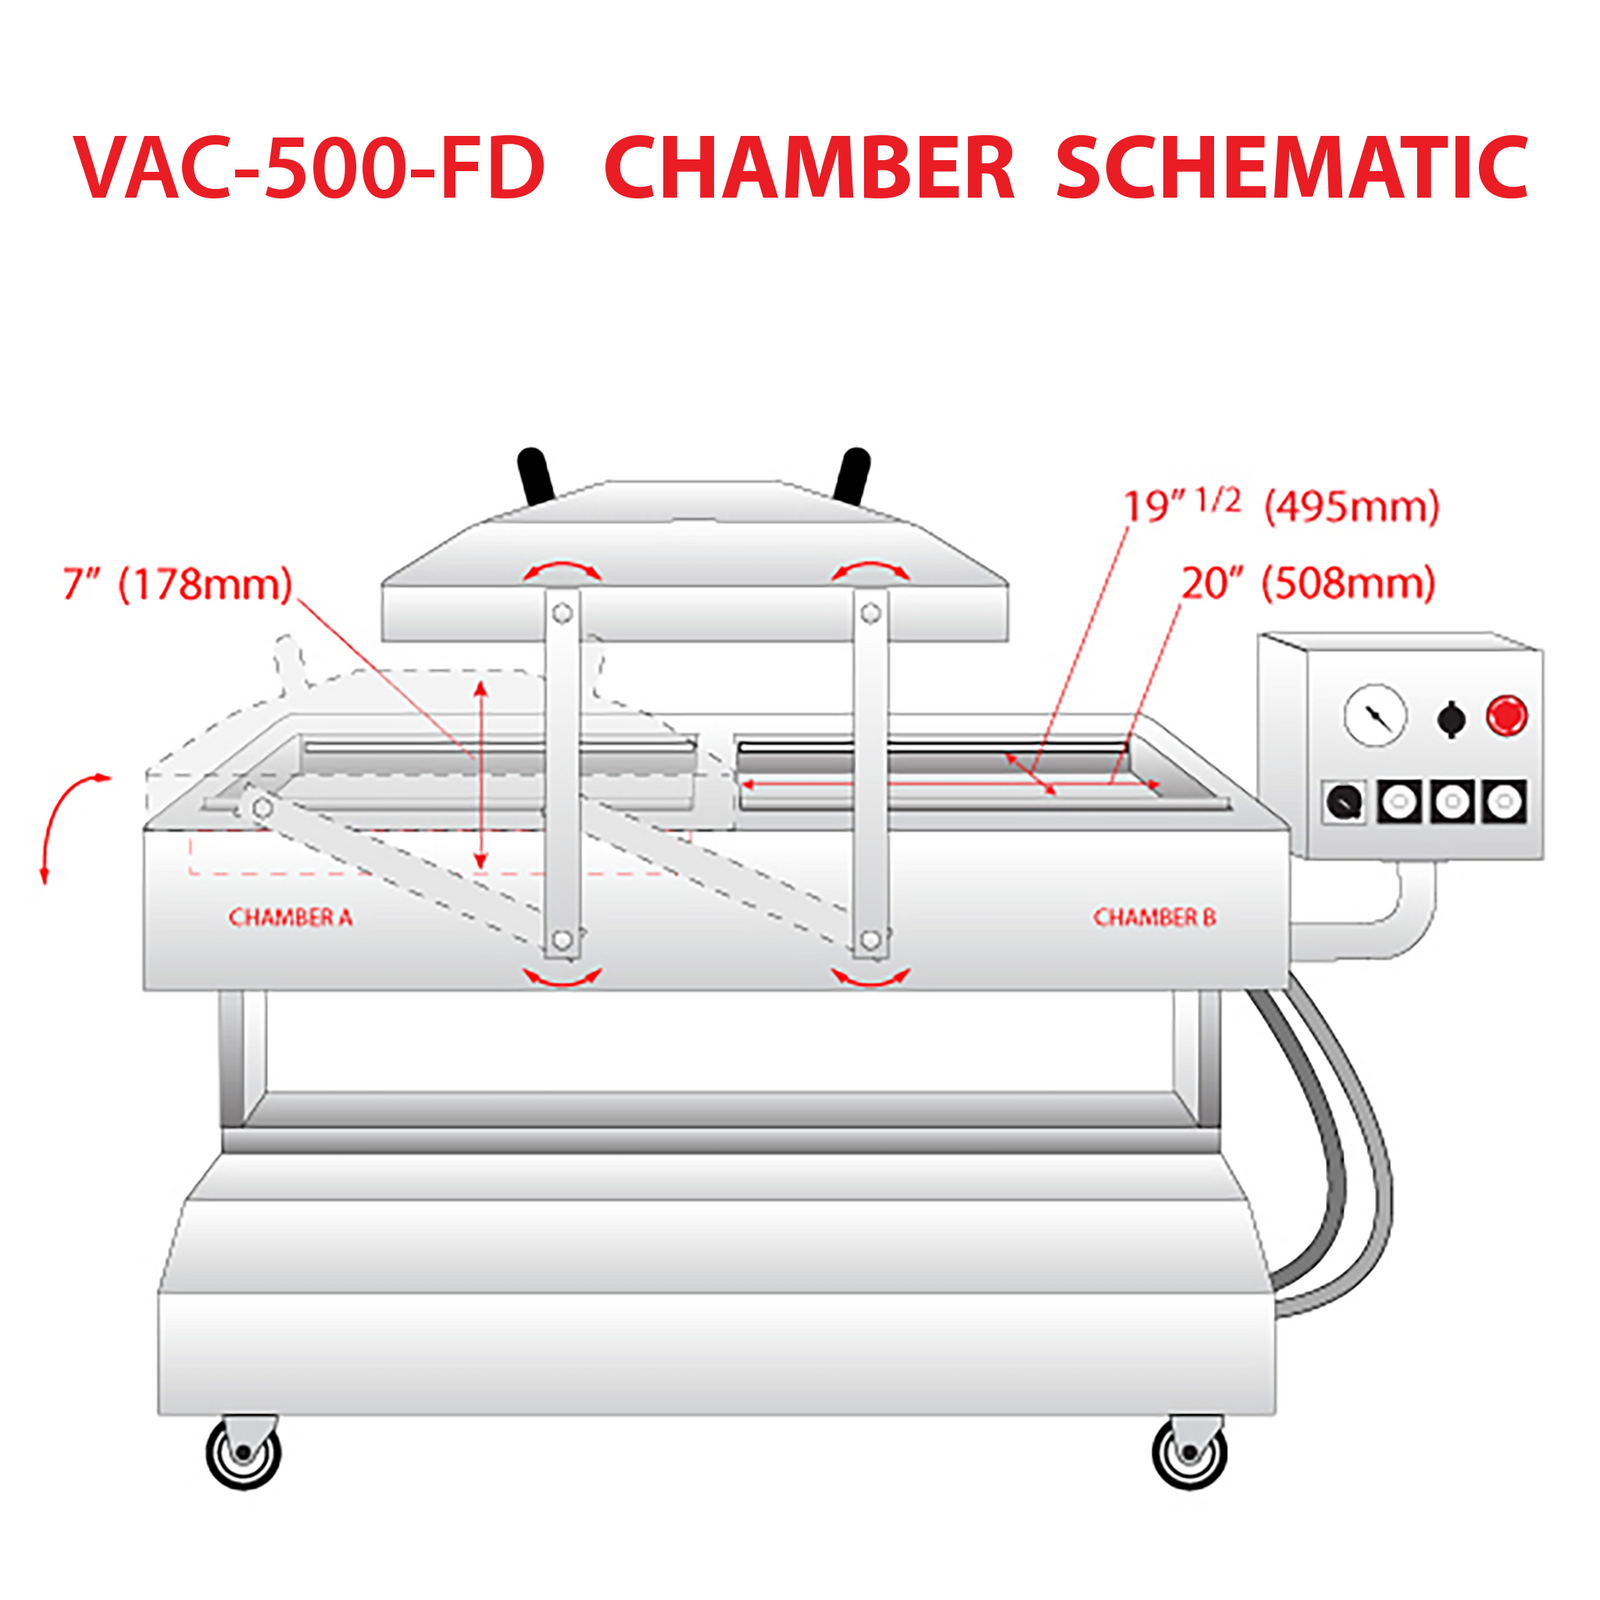 Buy SealerSales TC-520LR 21 Tabletop Chamber Vacuum Sealer (2 Seal Bars)  w/ Electric Cut-Off 3mm Seal Width (TC-520LR)